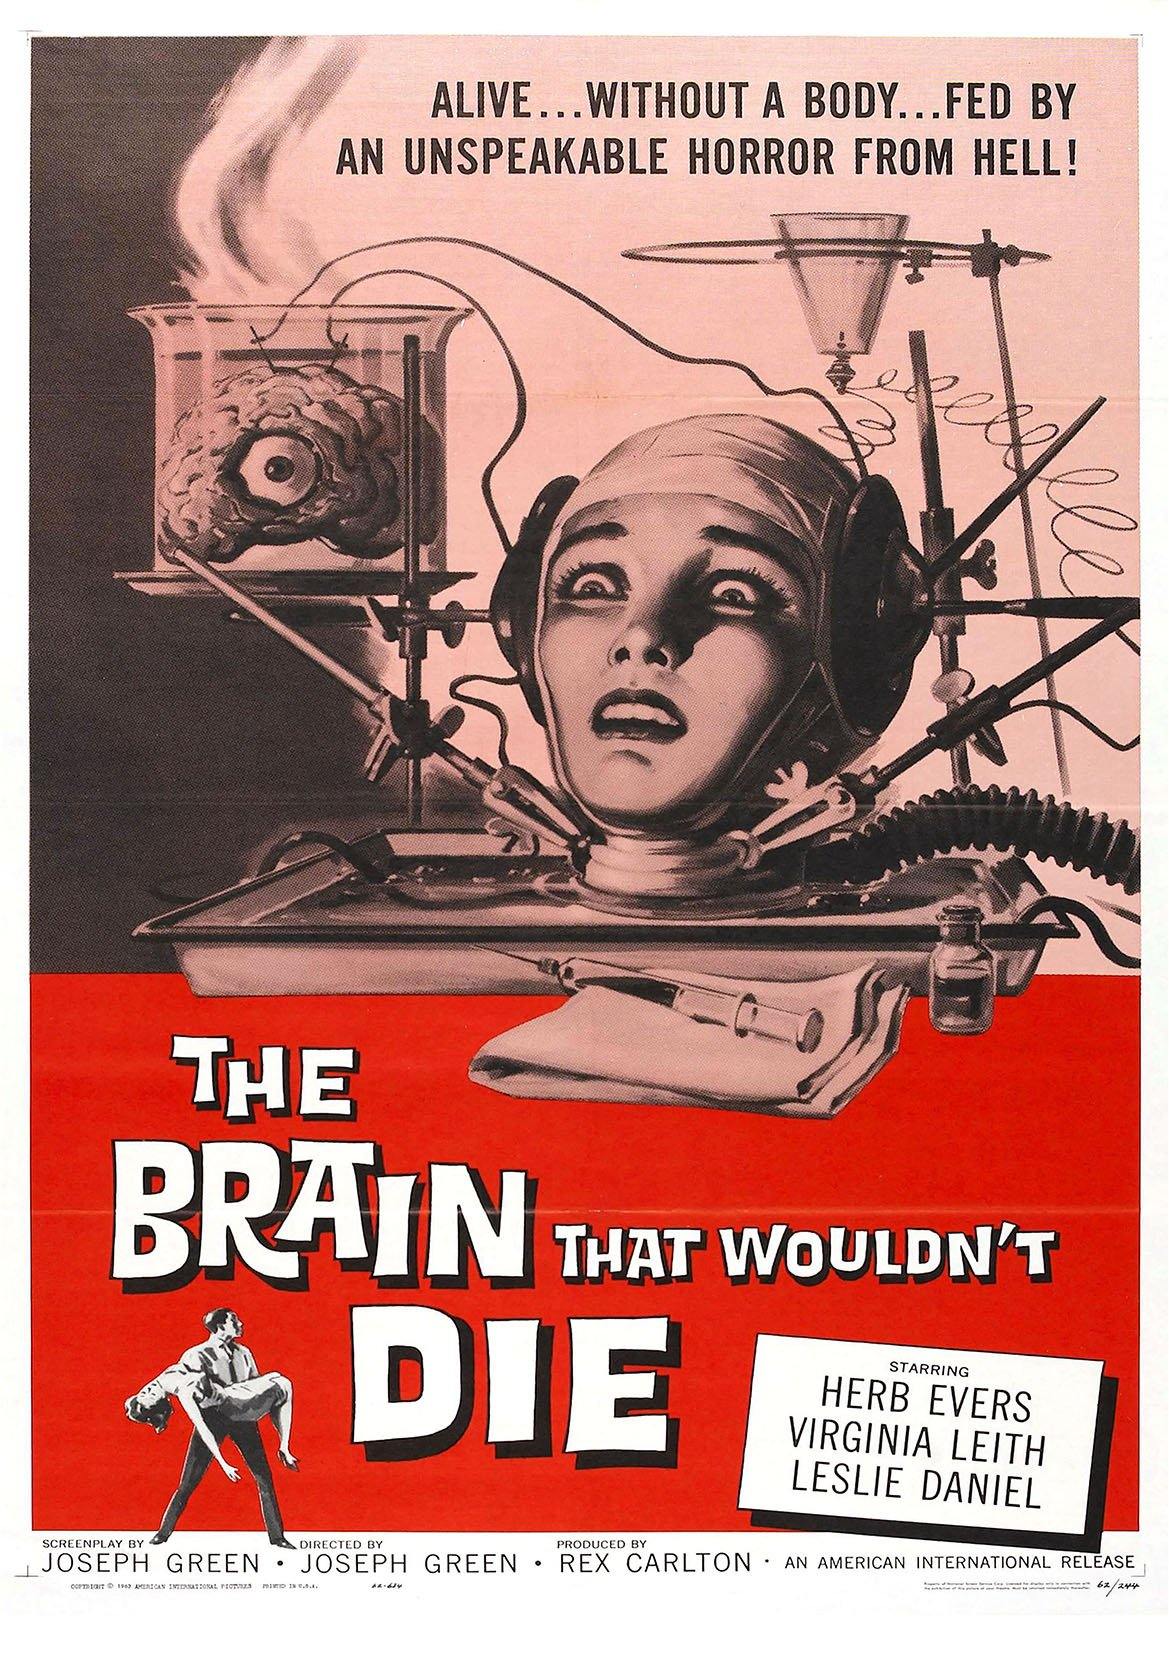 B-MOVIE CINEMA POSTER: The Brain that Wouldn't Die Print - Pimlico Prints